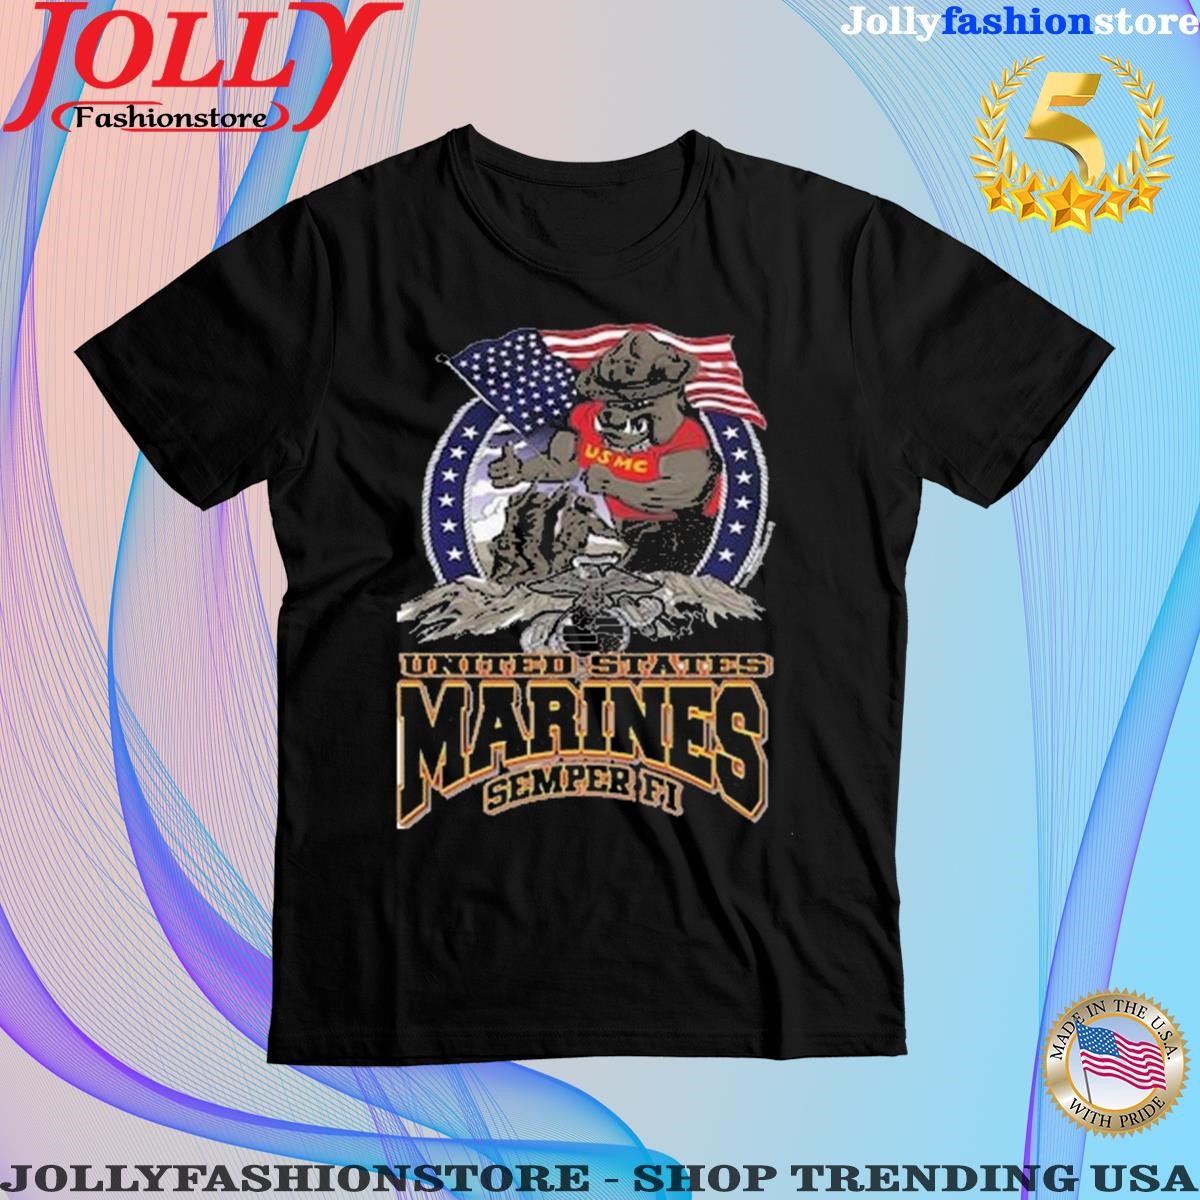 United states marines semper fI shirt